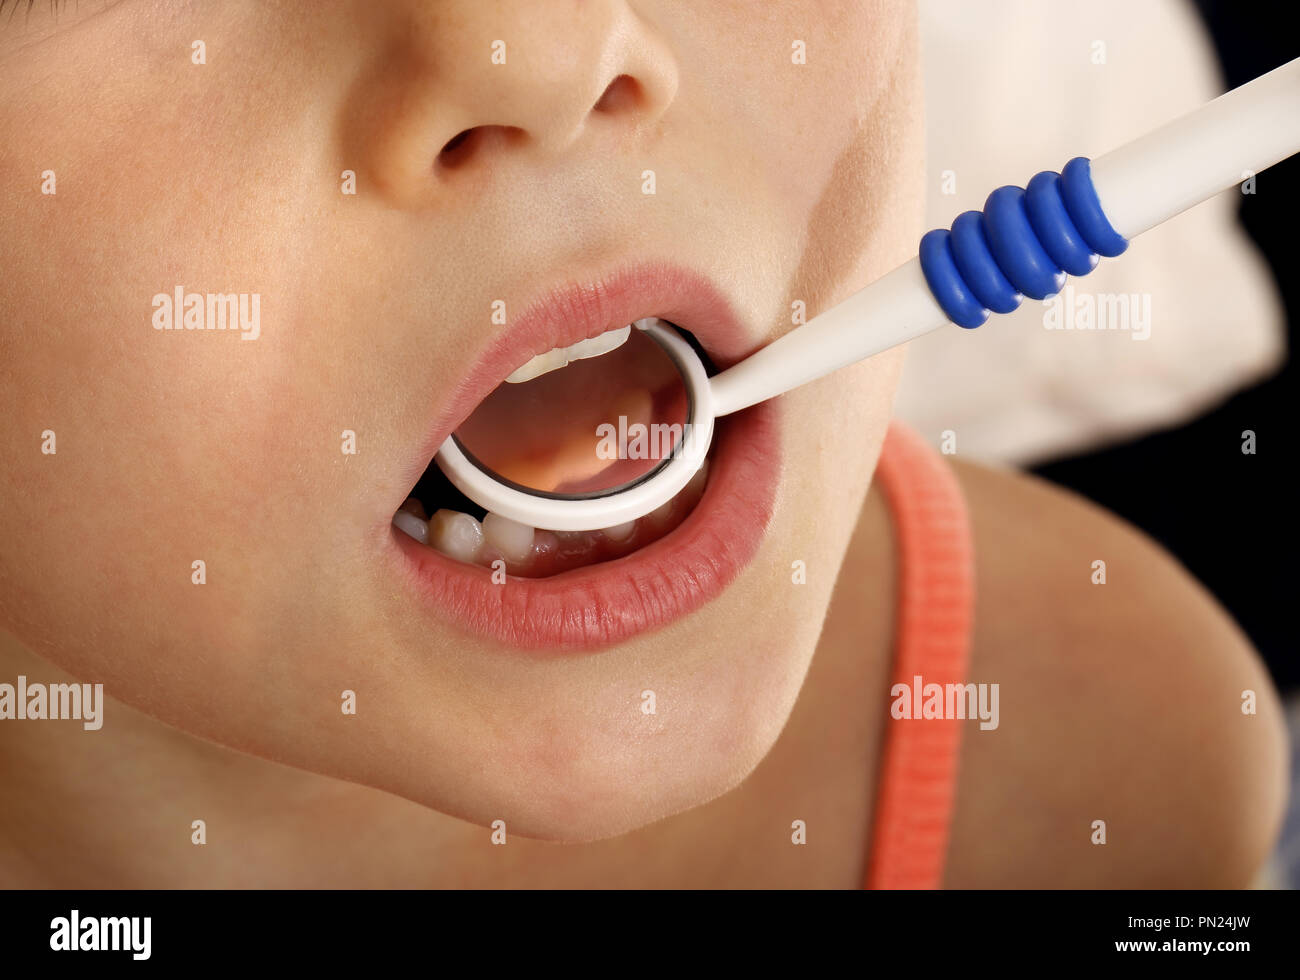 Six year old girl having teeth examined by dentist Stock Photo